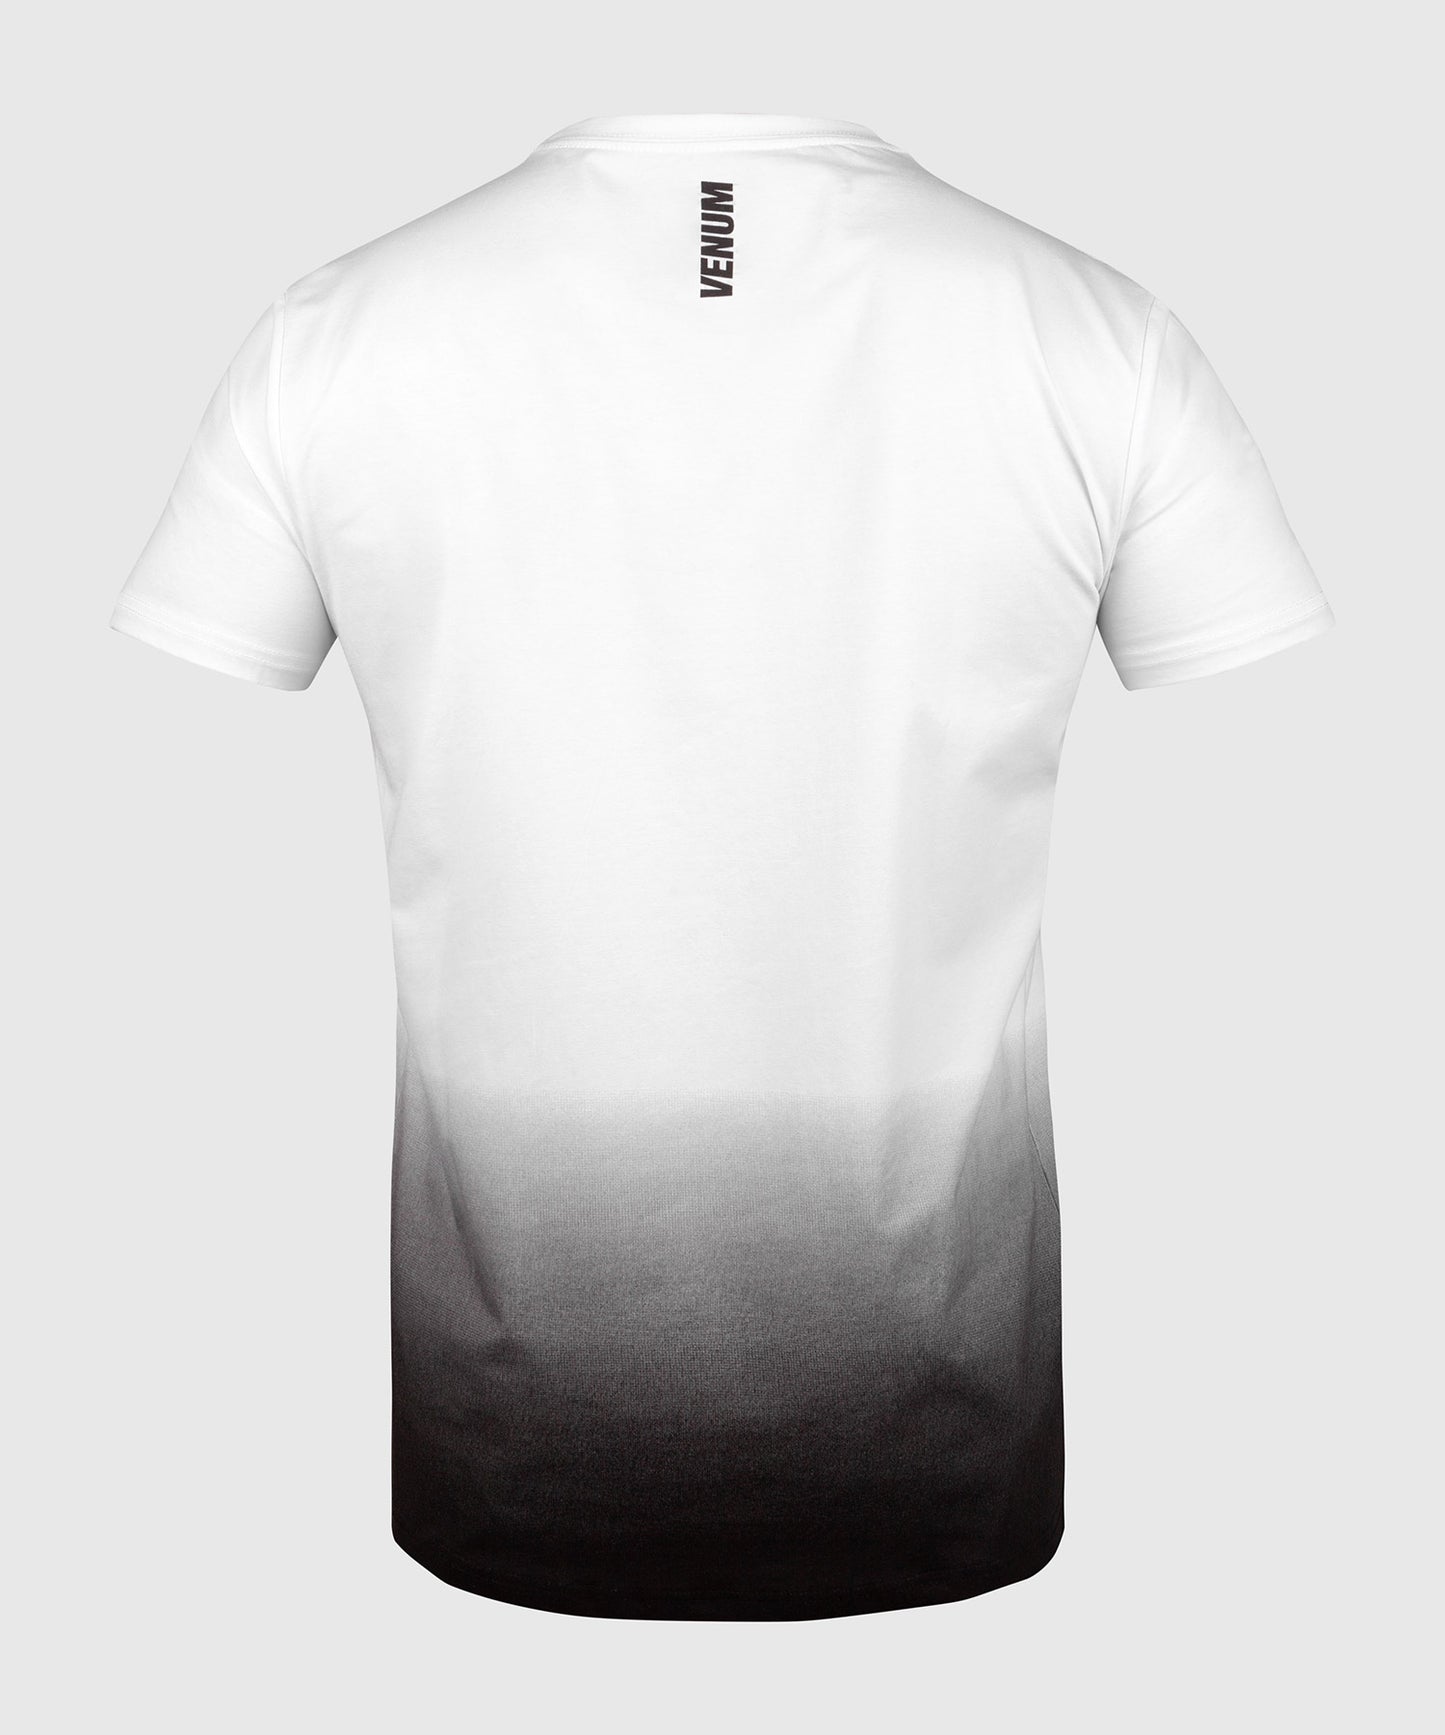 Camiseta Jiu Jitstu VT de Venum - Blanco/Negro